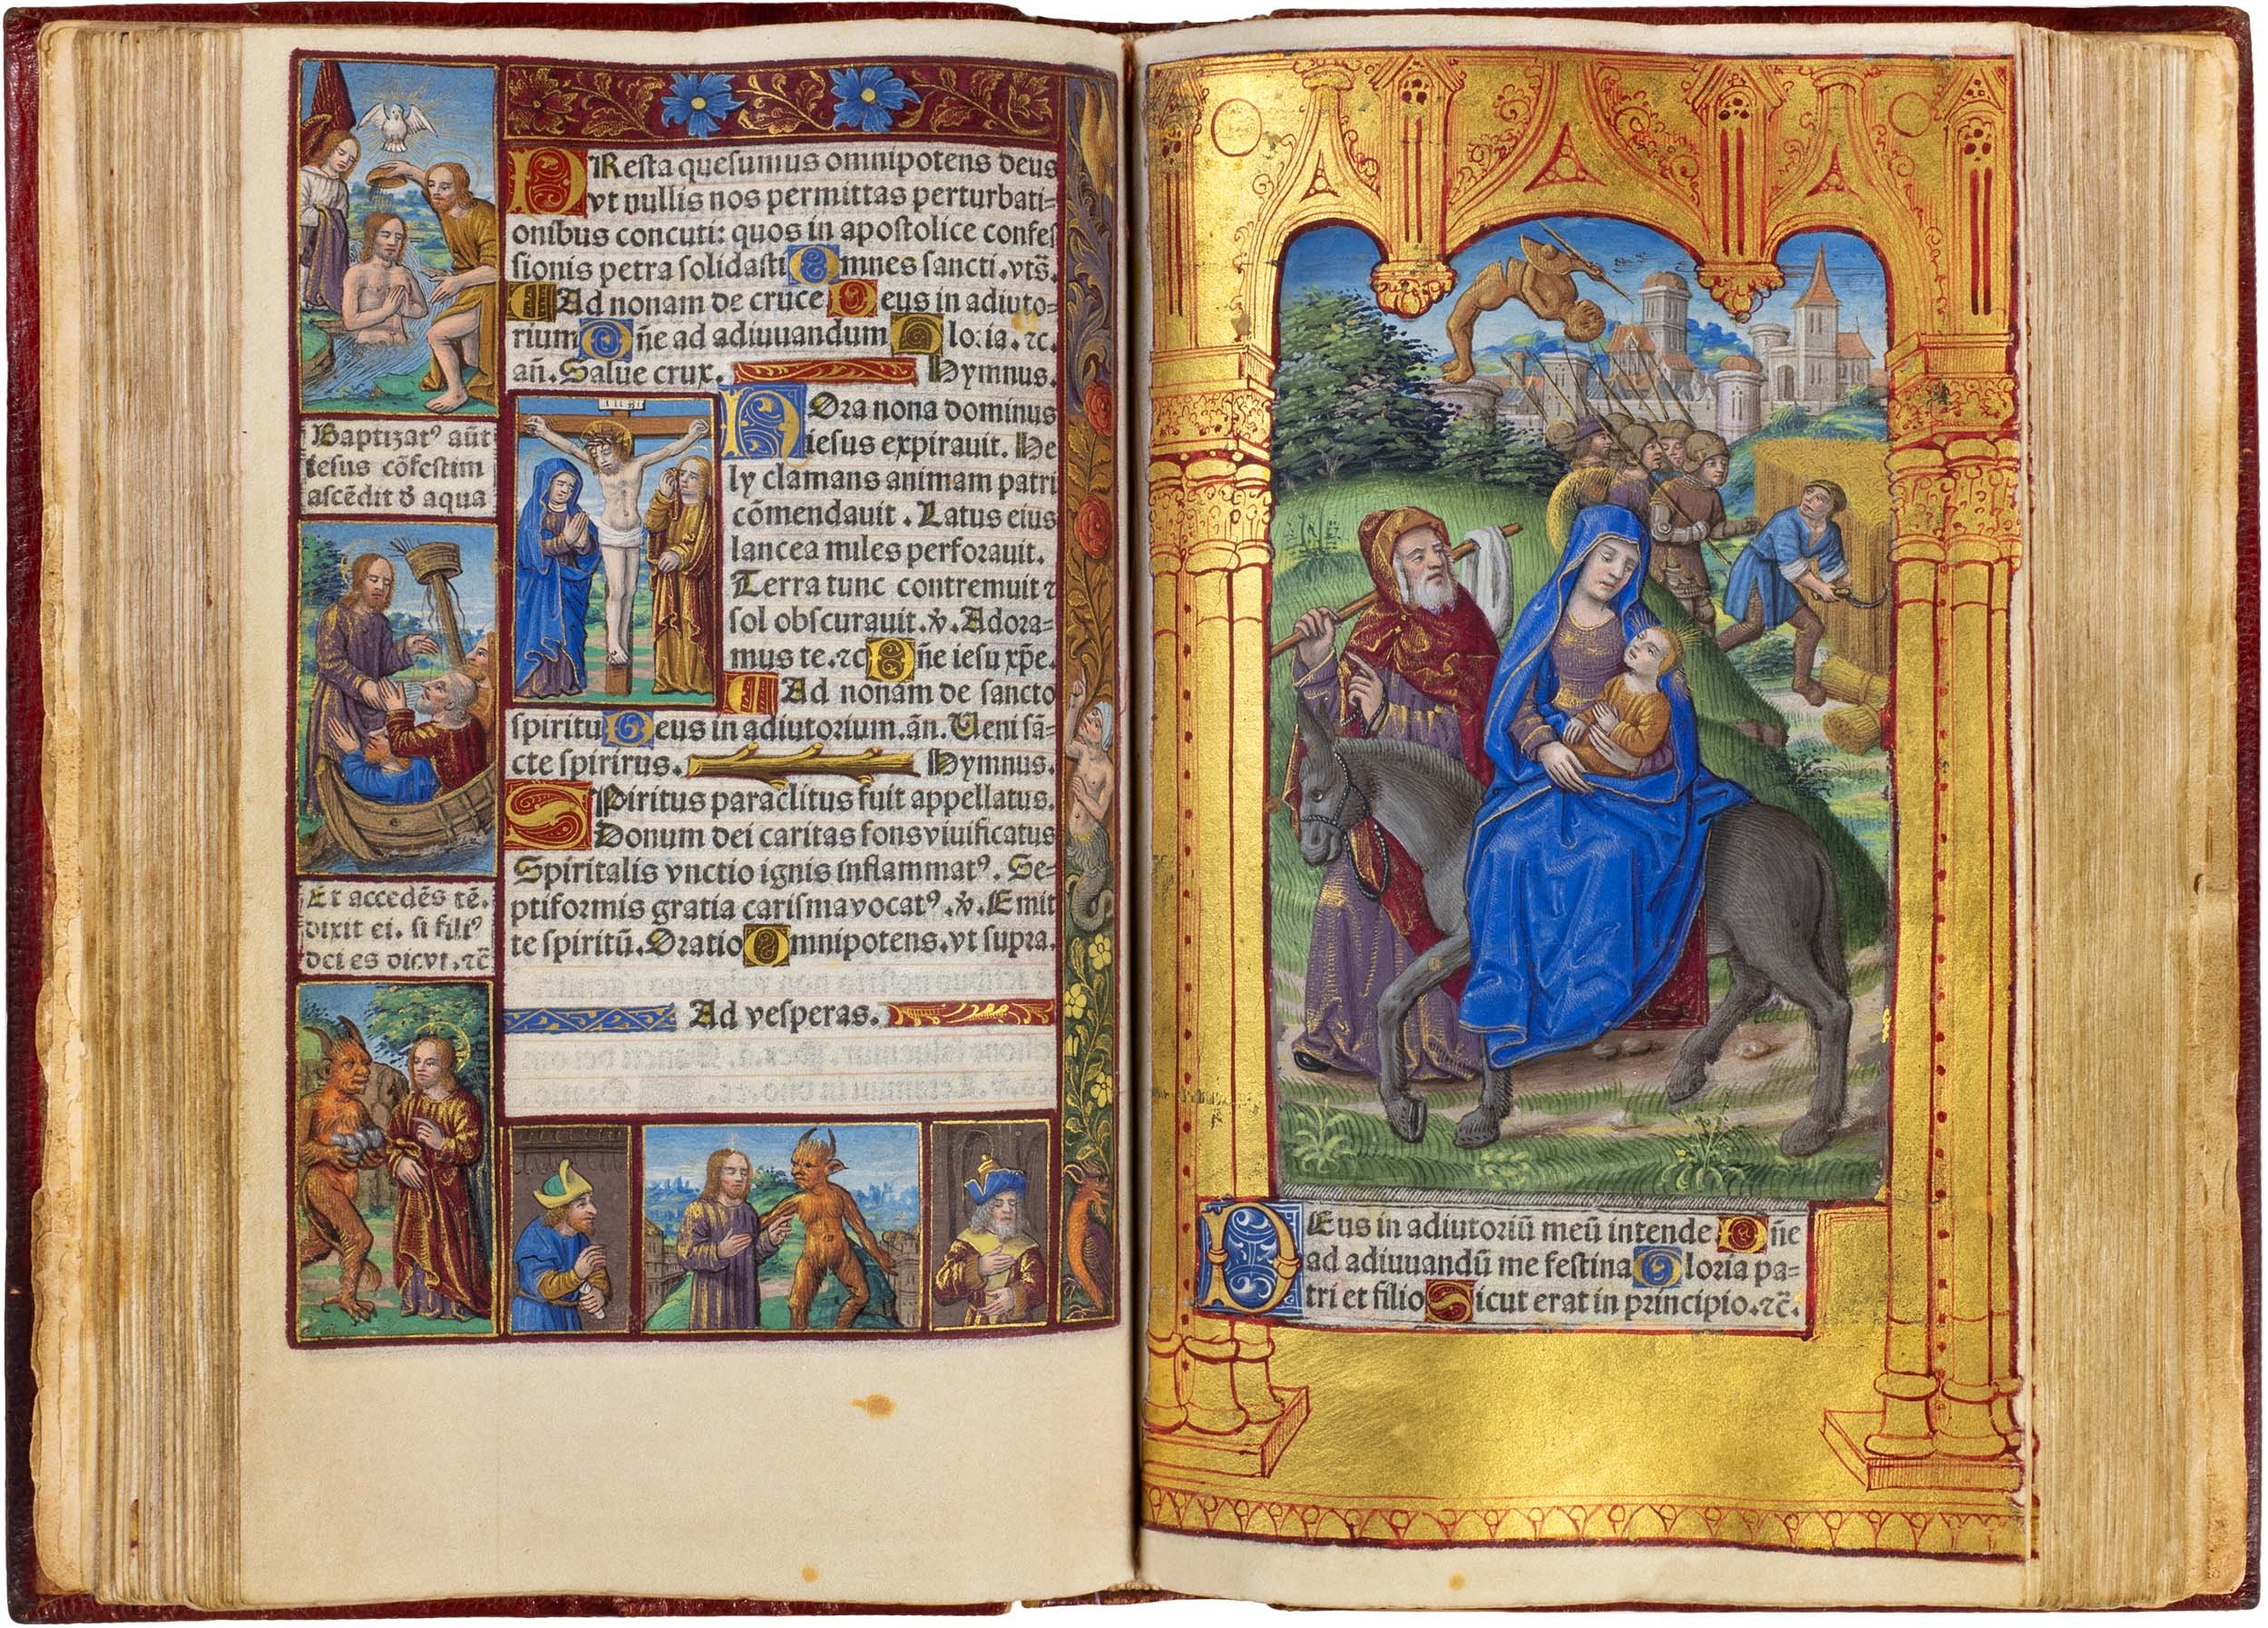 Horae-bmv-book-of-hours-Louis-XII-martainville-master-philippa-guelders-paris-pigouchet-vostre-15.10.1499-41.jpg